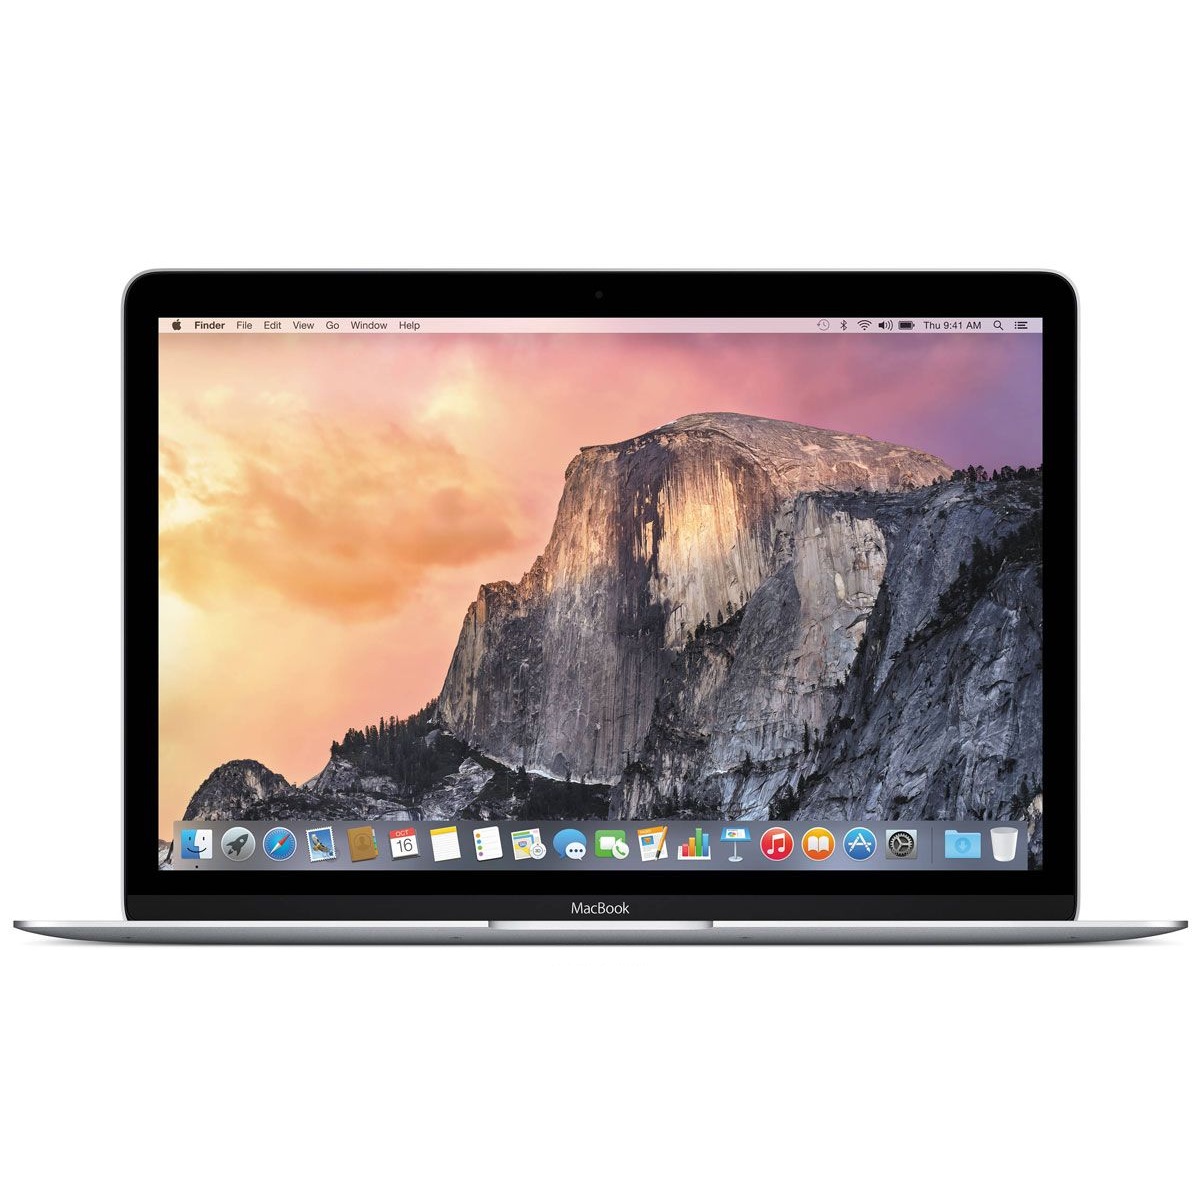 Ноутбук Apple MacBook 12 2016 Silver (MLHA2RU/A) (Core m3 1100Mhz/12.0/2304x1440/8.0Gb/256Gb SSD/DVD нет/Intel HD Graphics 515/Wi-Fi/Bluetooth/MacOS X)